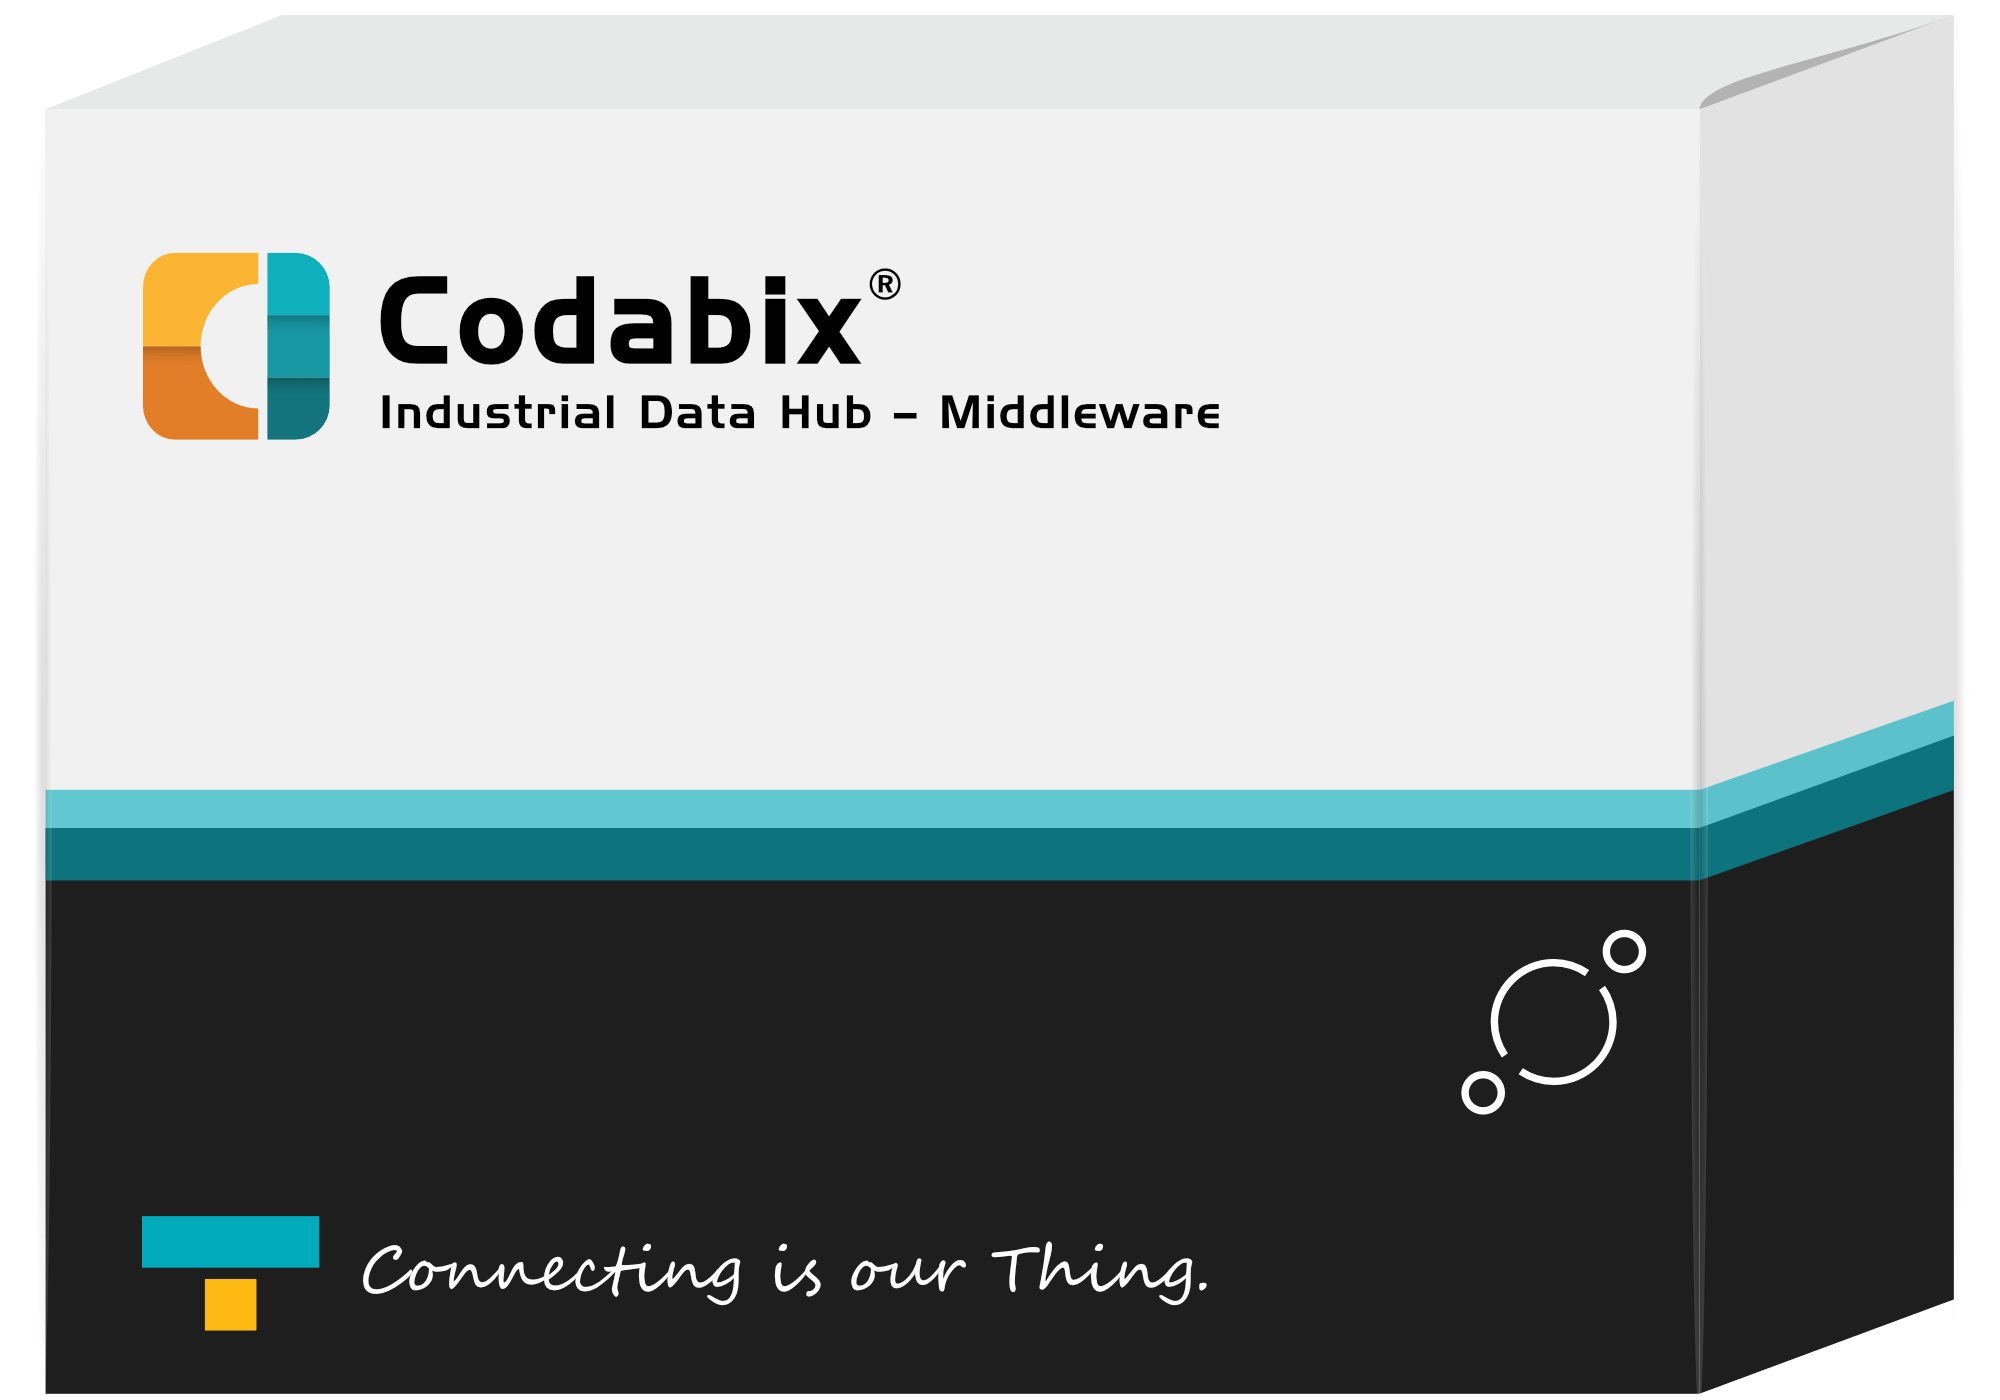 Codabix Industrial Data Hub product image